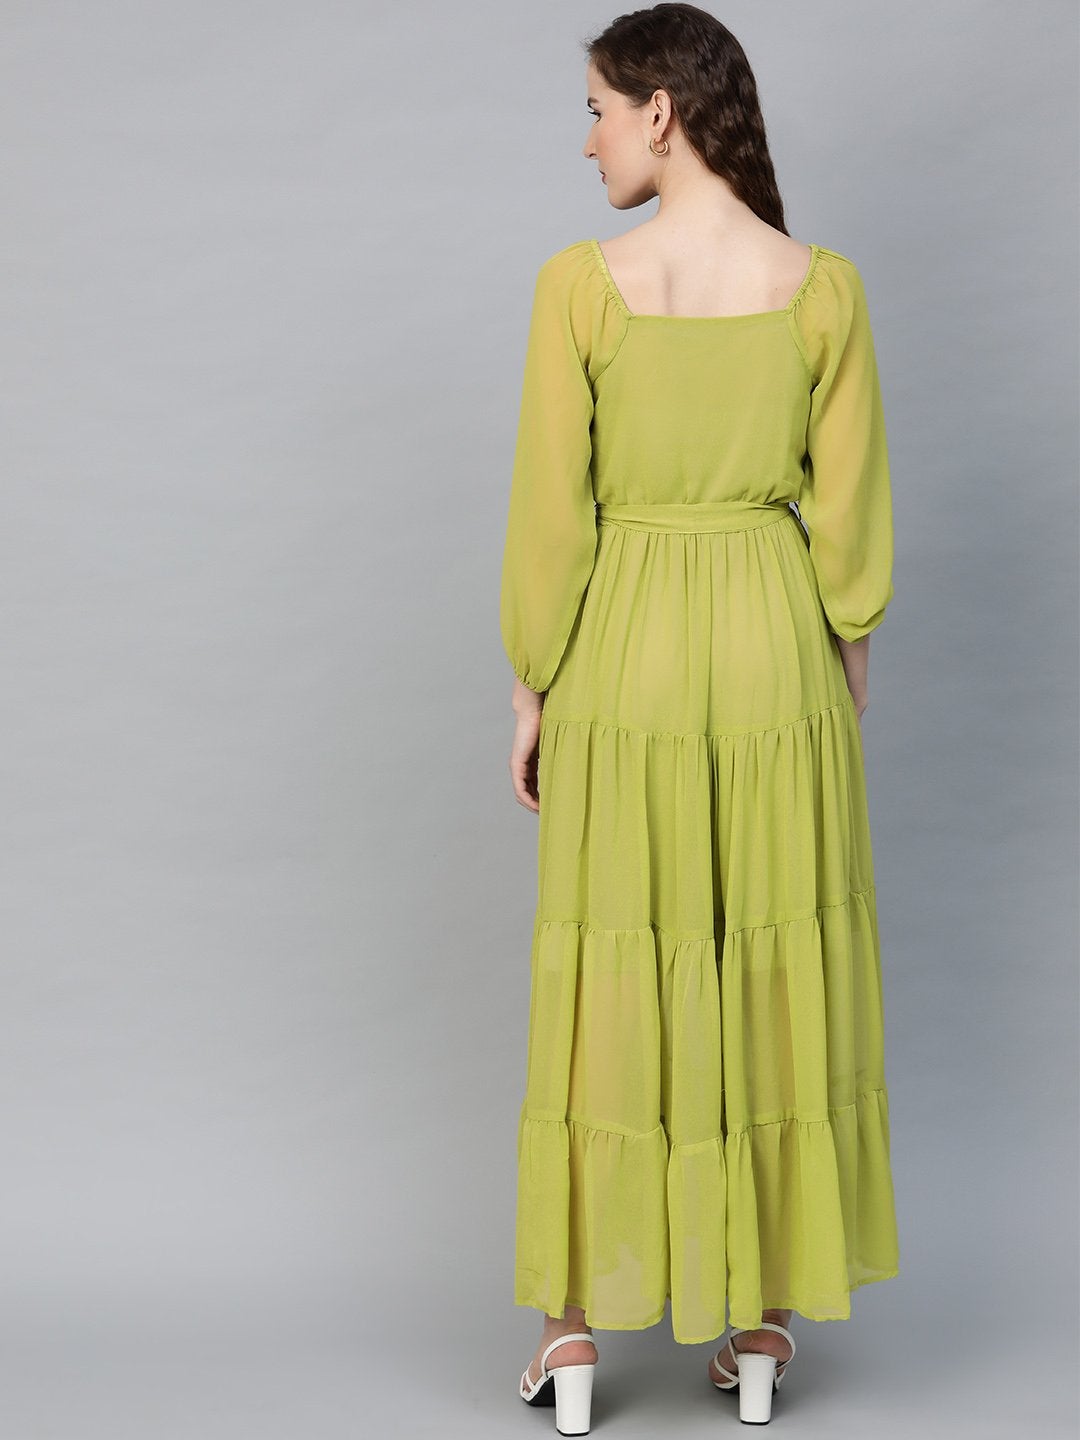 Women's Green Square Neck Tiered Maxi Dress - SASSAFRAS